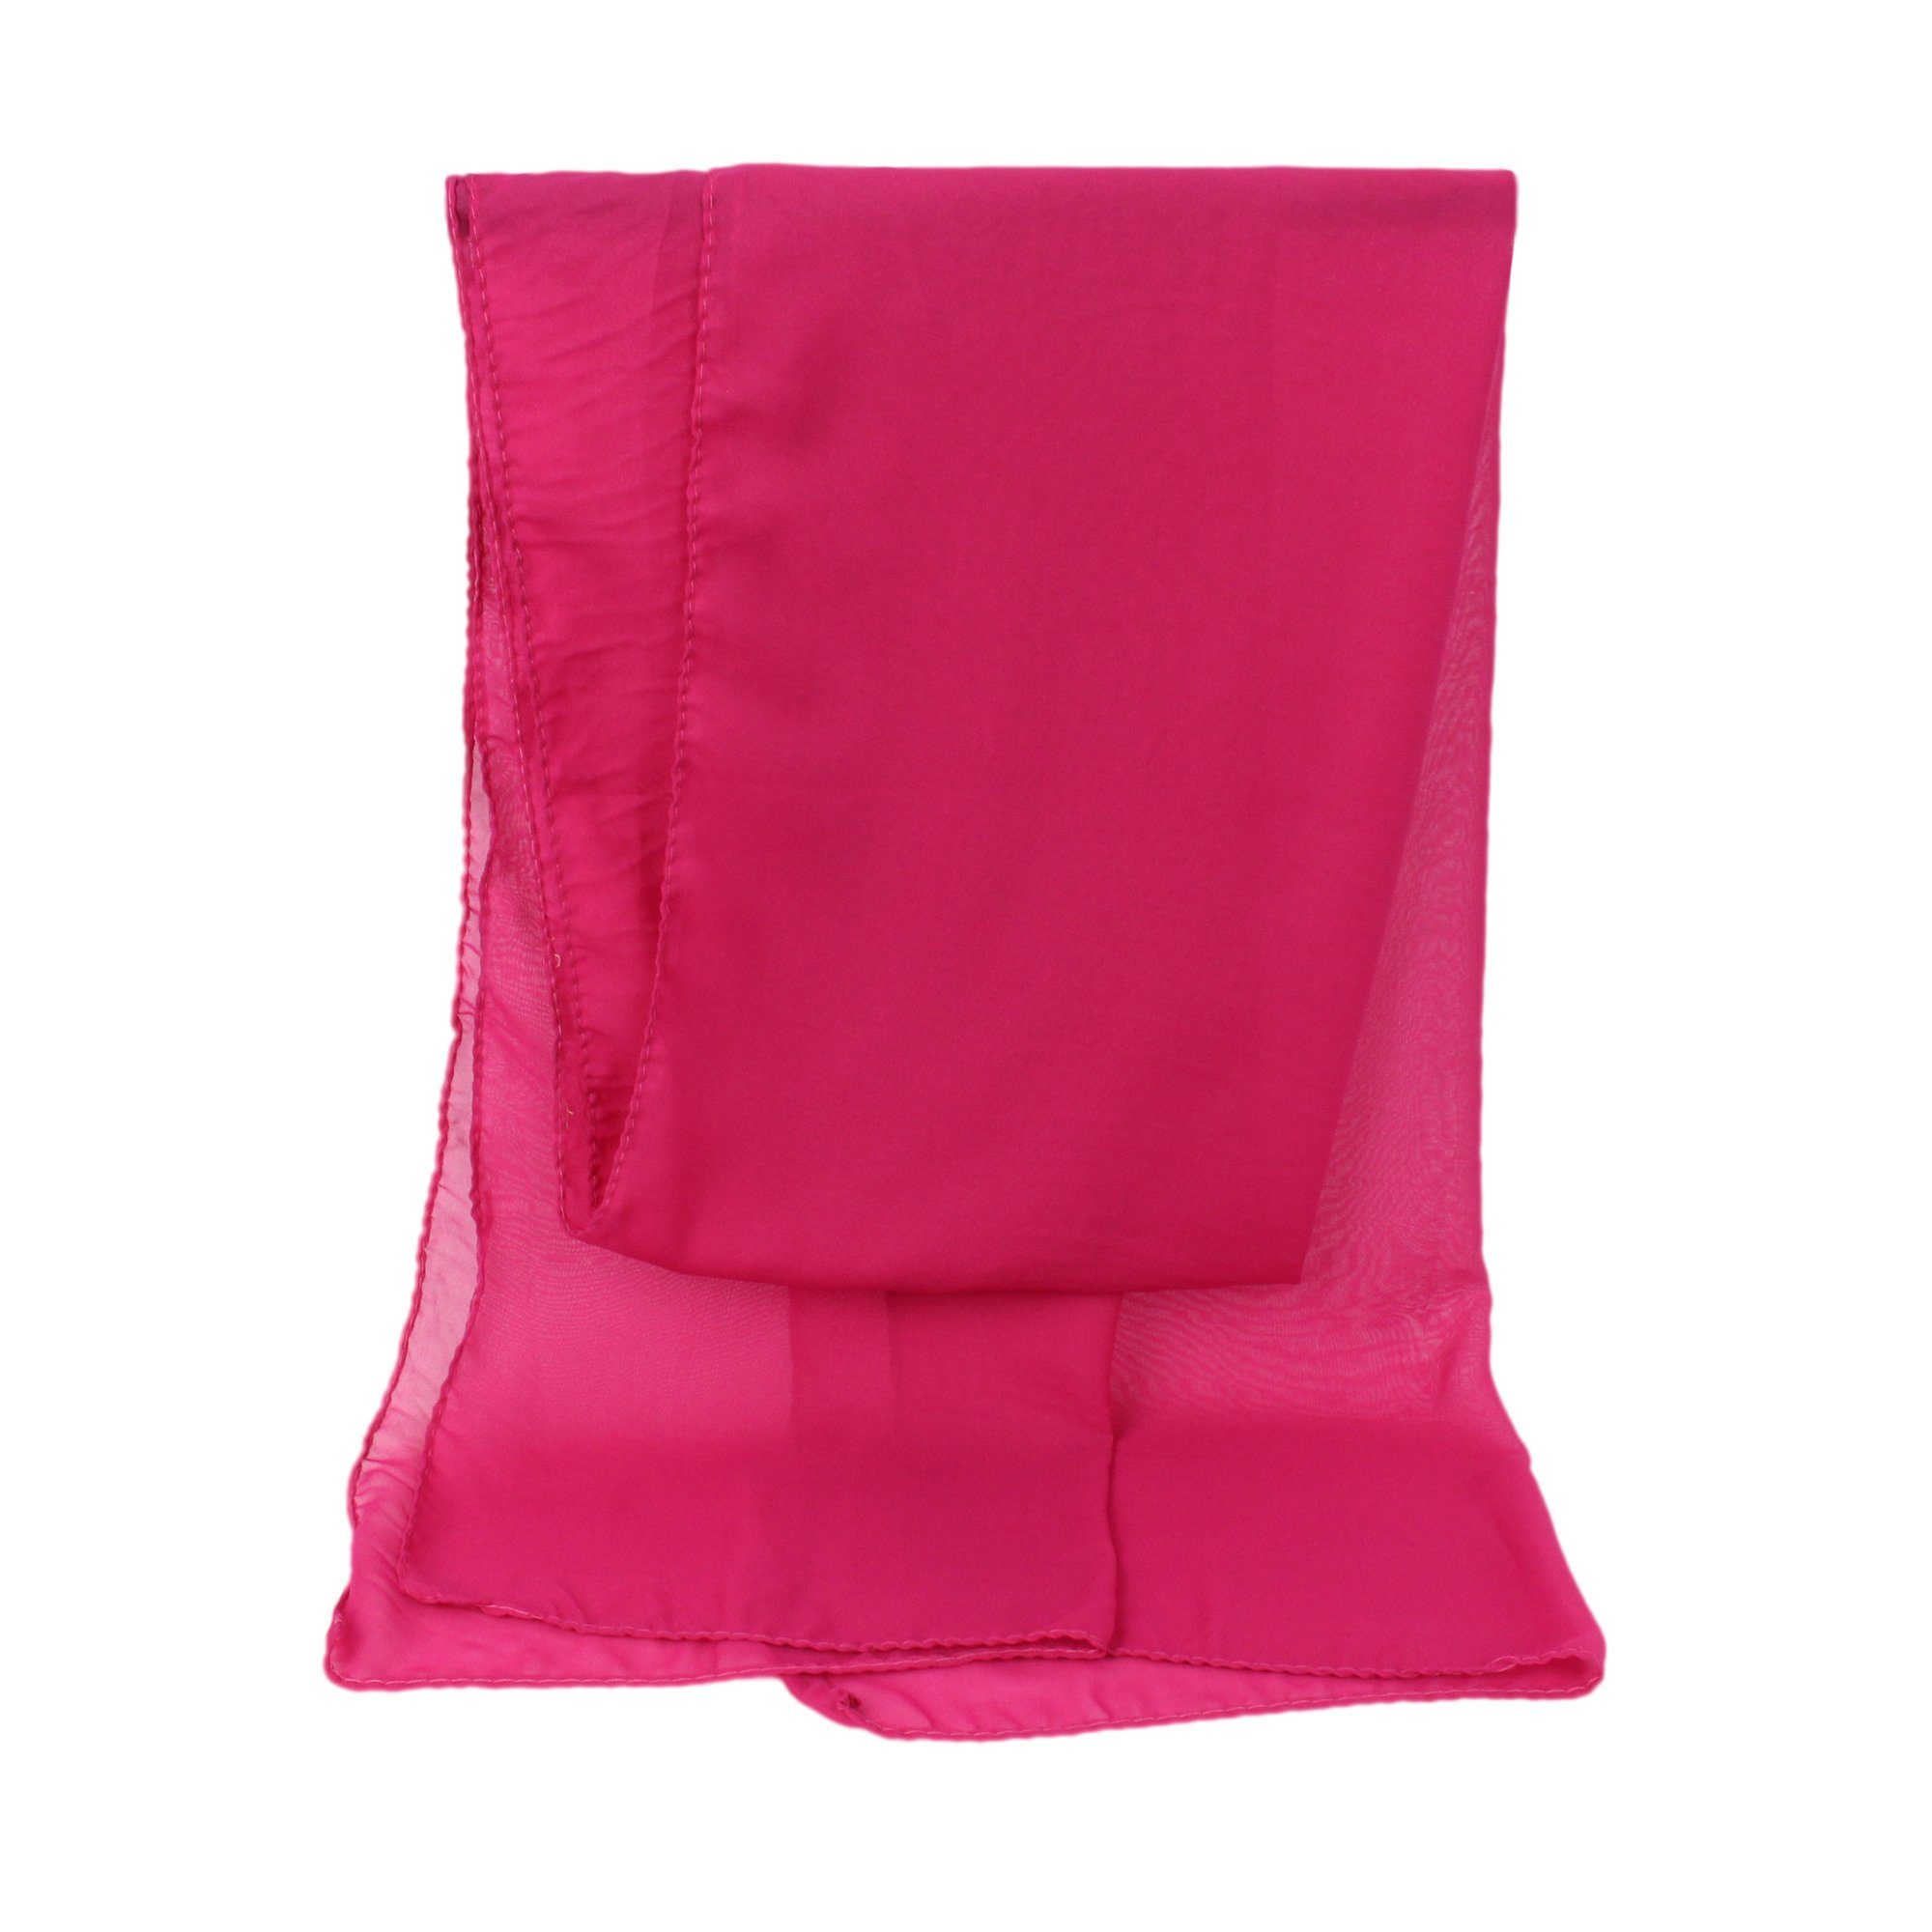 ZEBRO Modeschal Schal pink